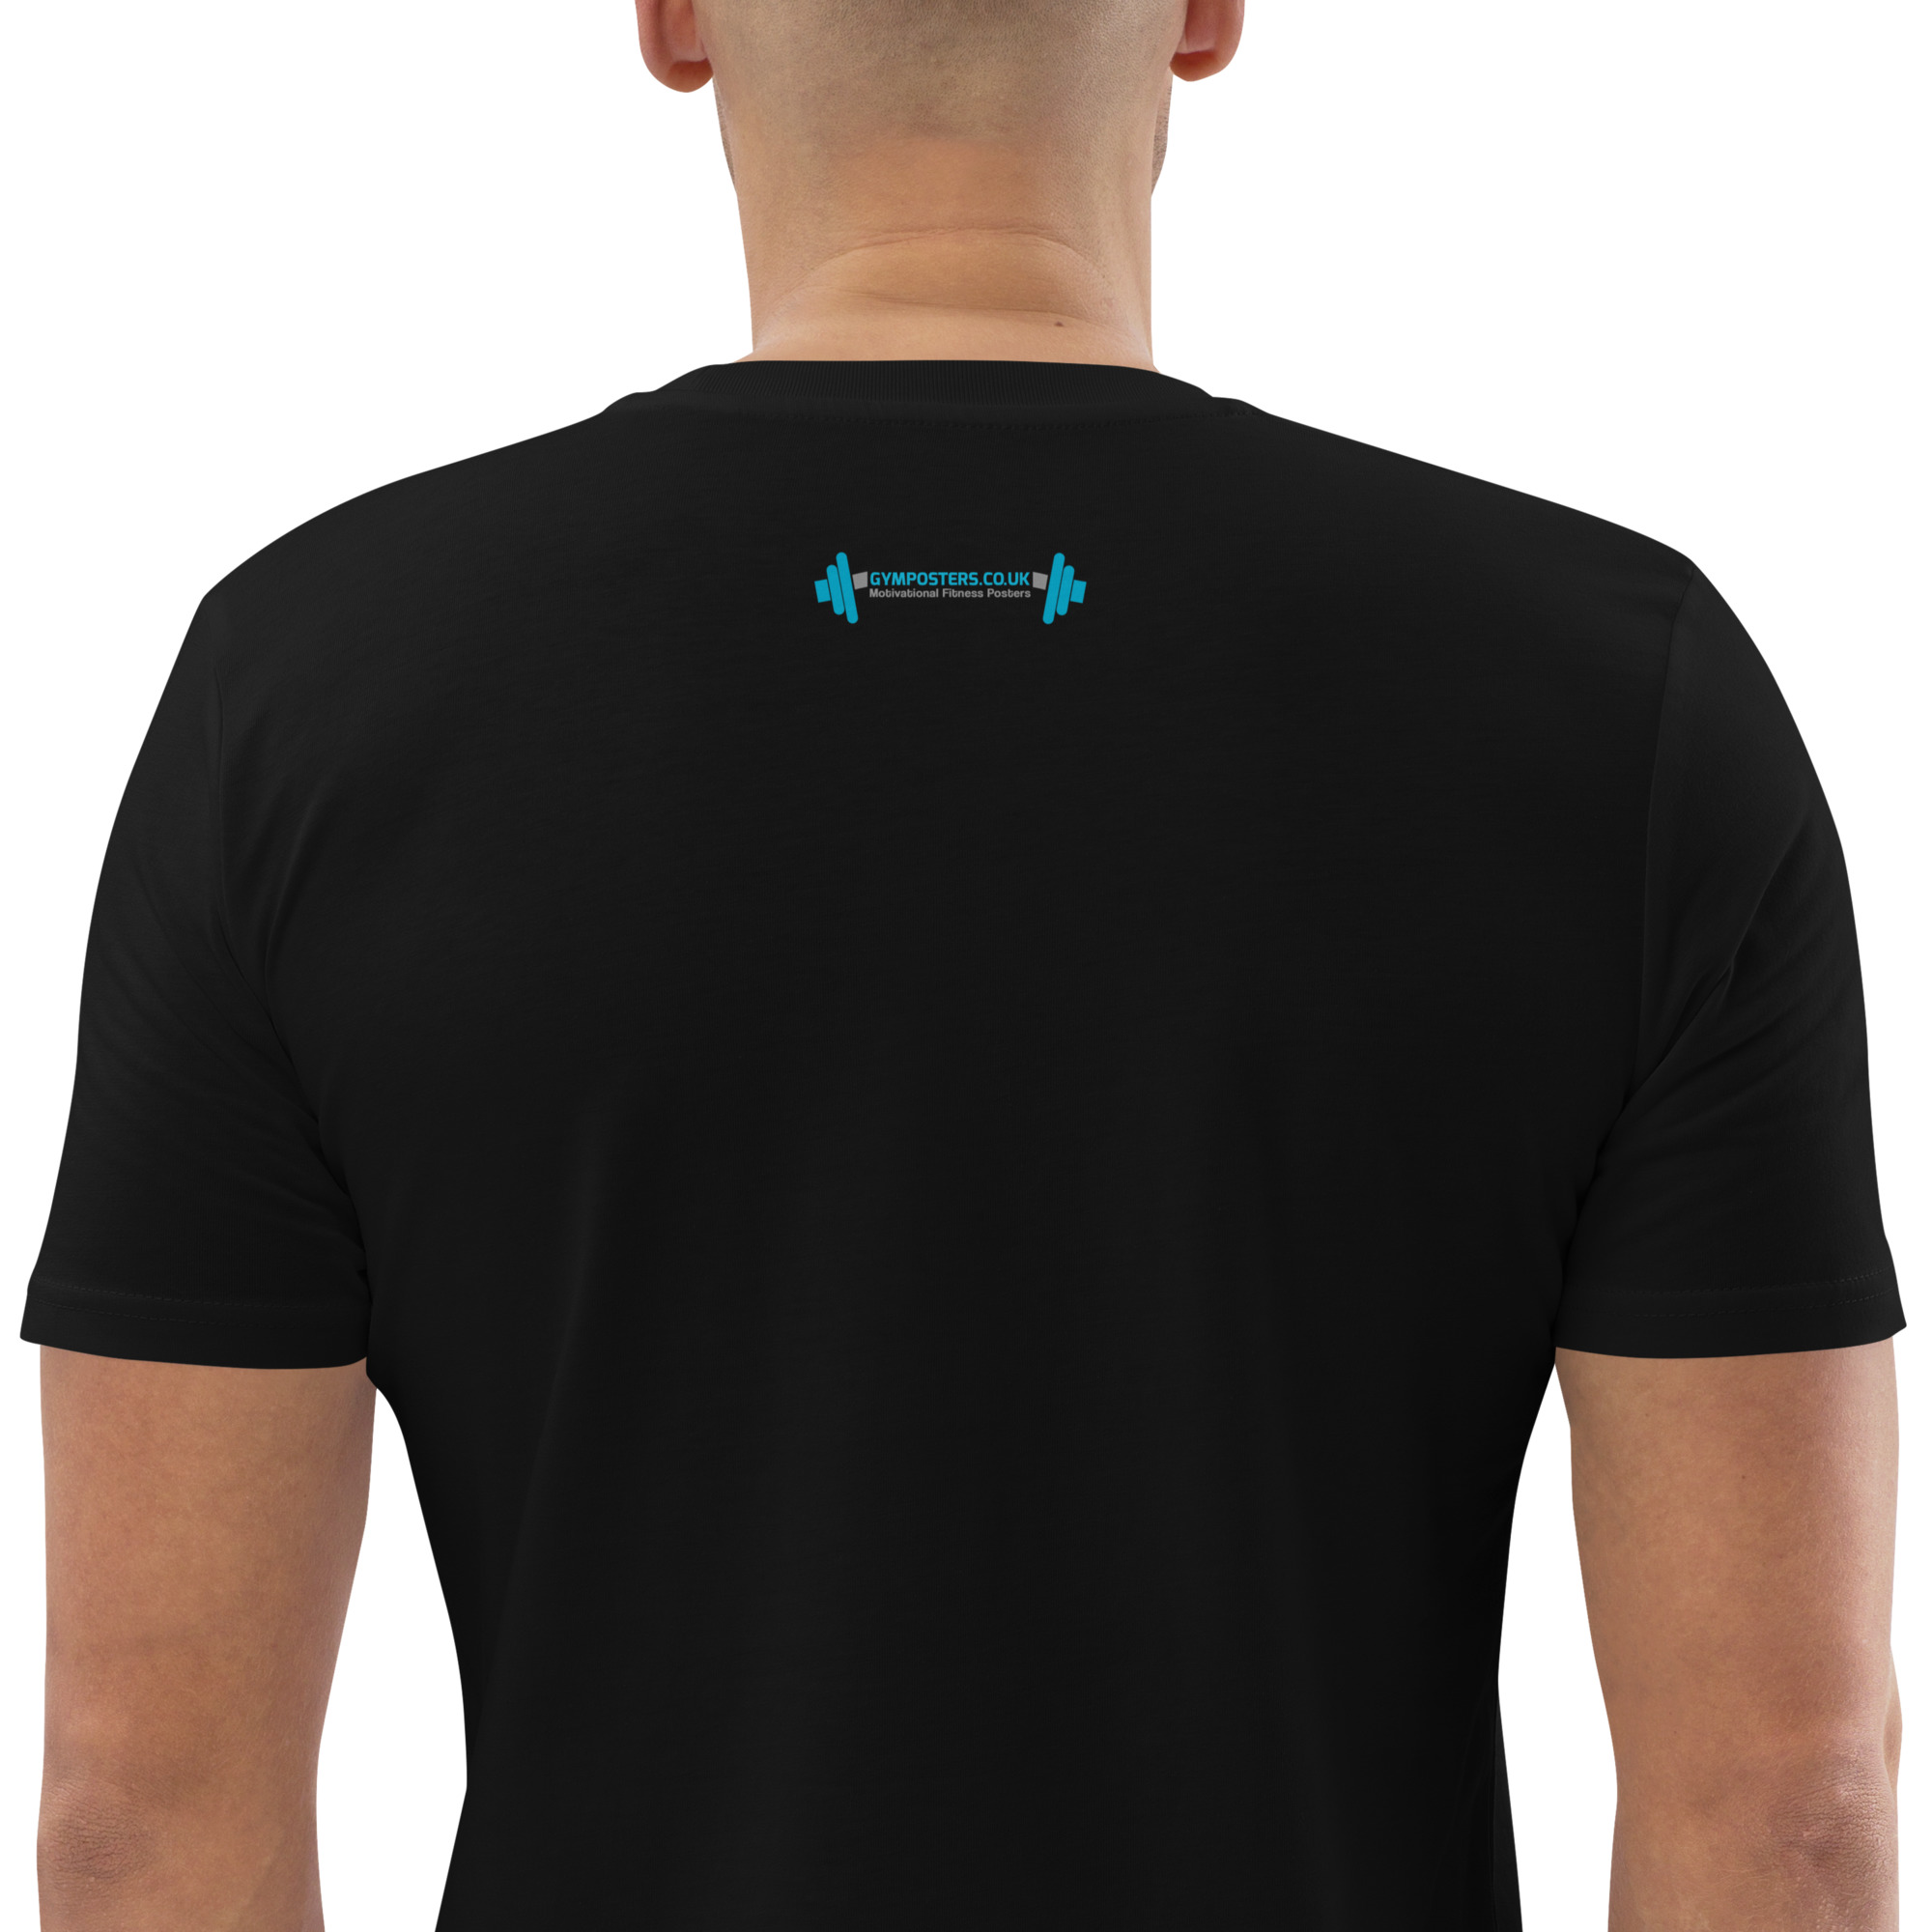 unisex-organic-cotton-t-shirt-black-zoomed-in-2-65785b878d483.jpg